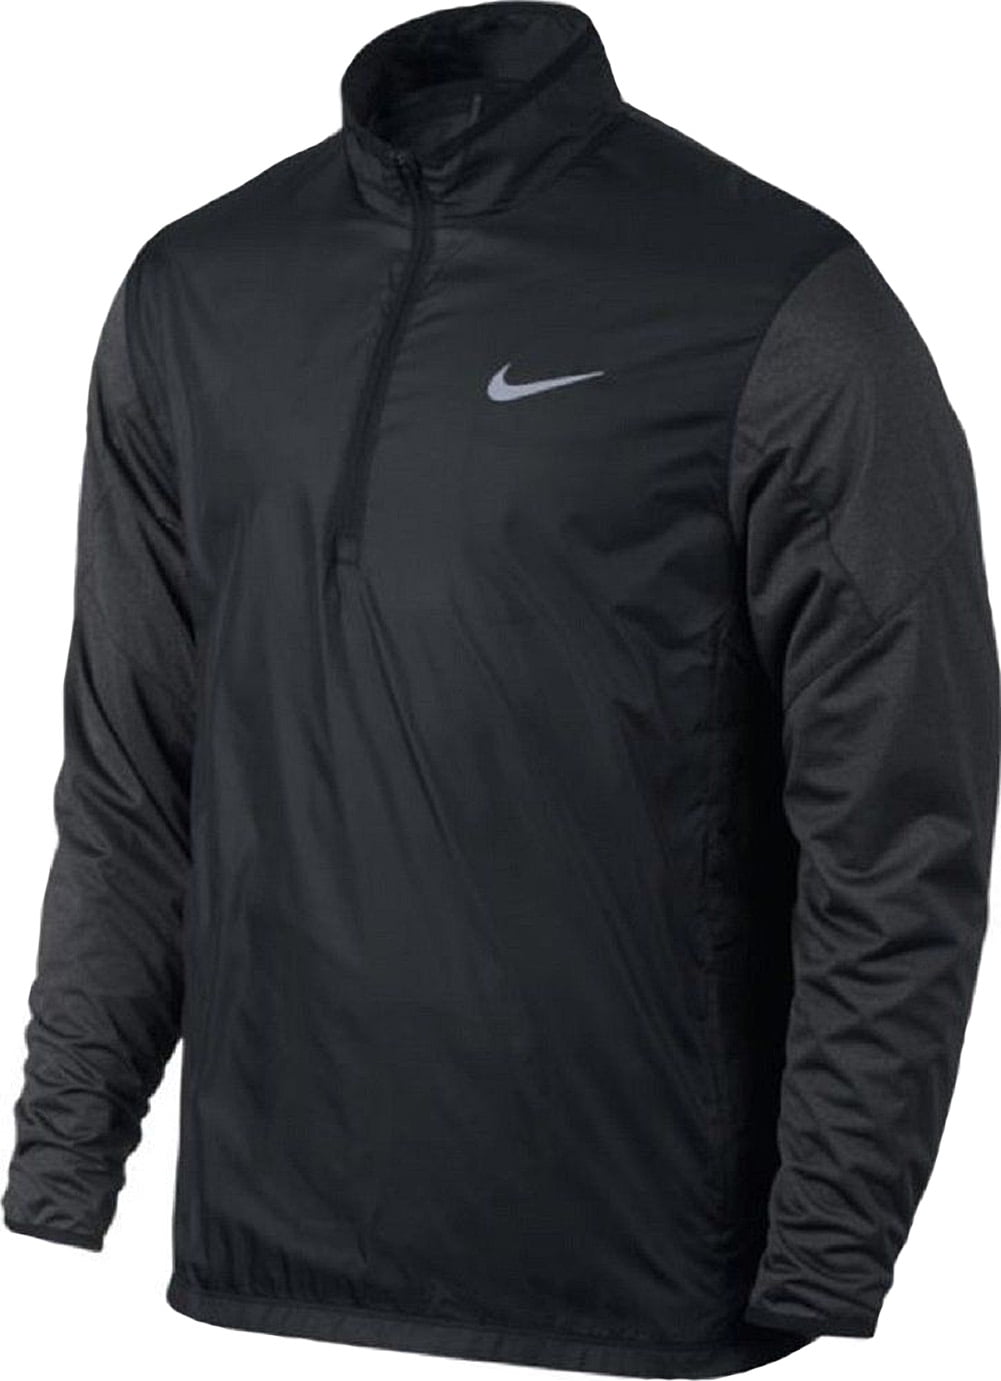 Nike Jacket No Sleeves - jacketl